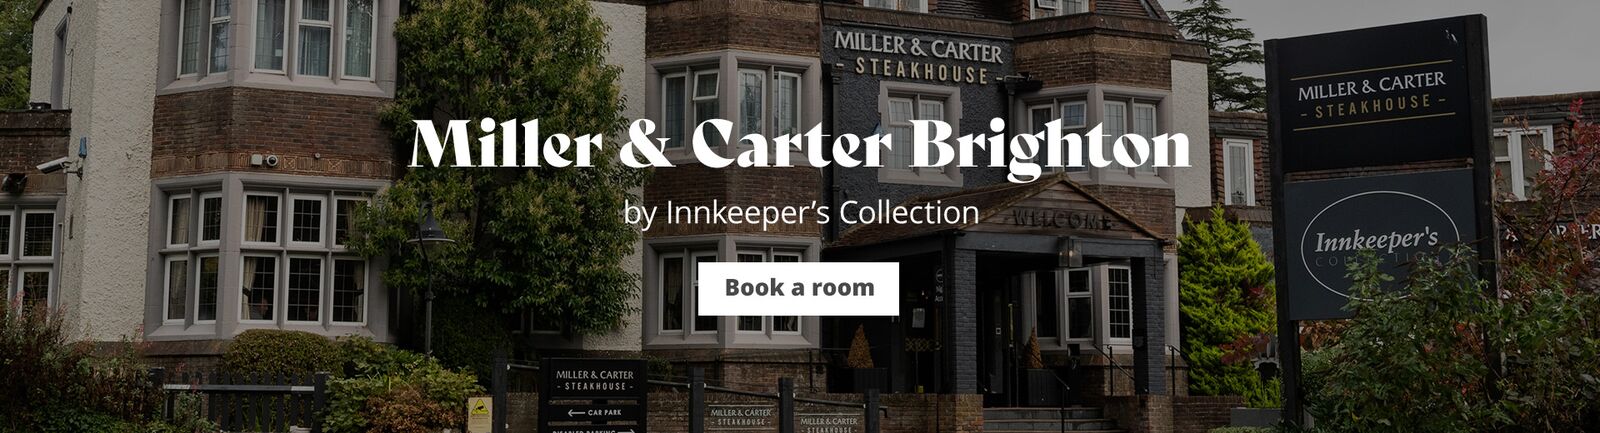 Miller & Carter Brighton